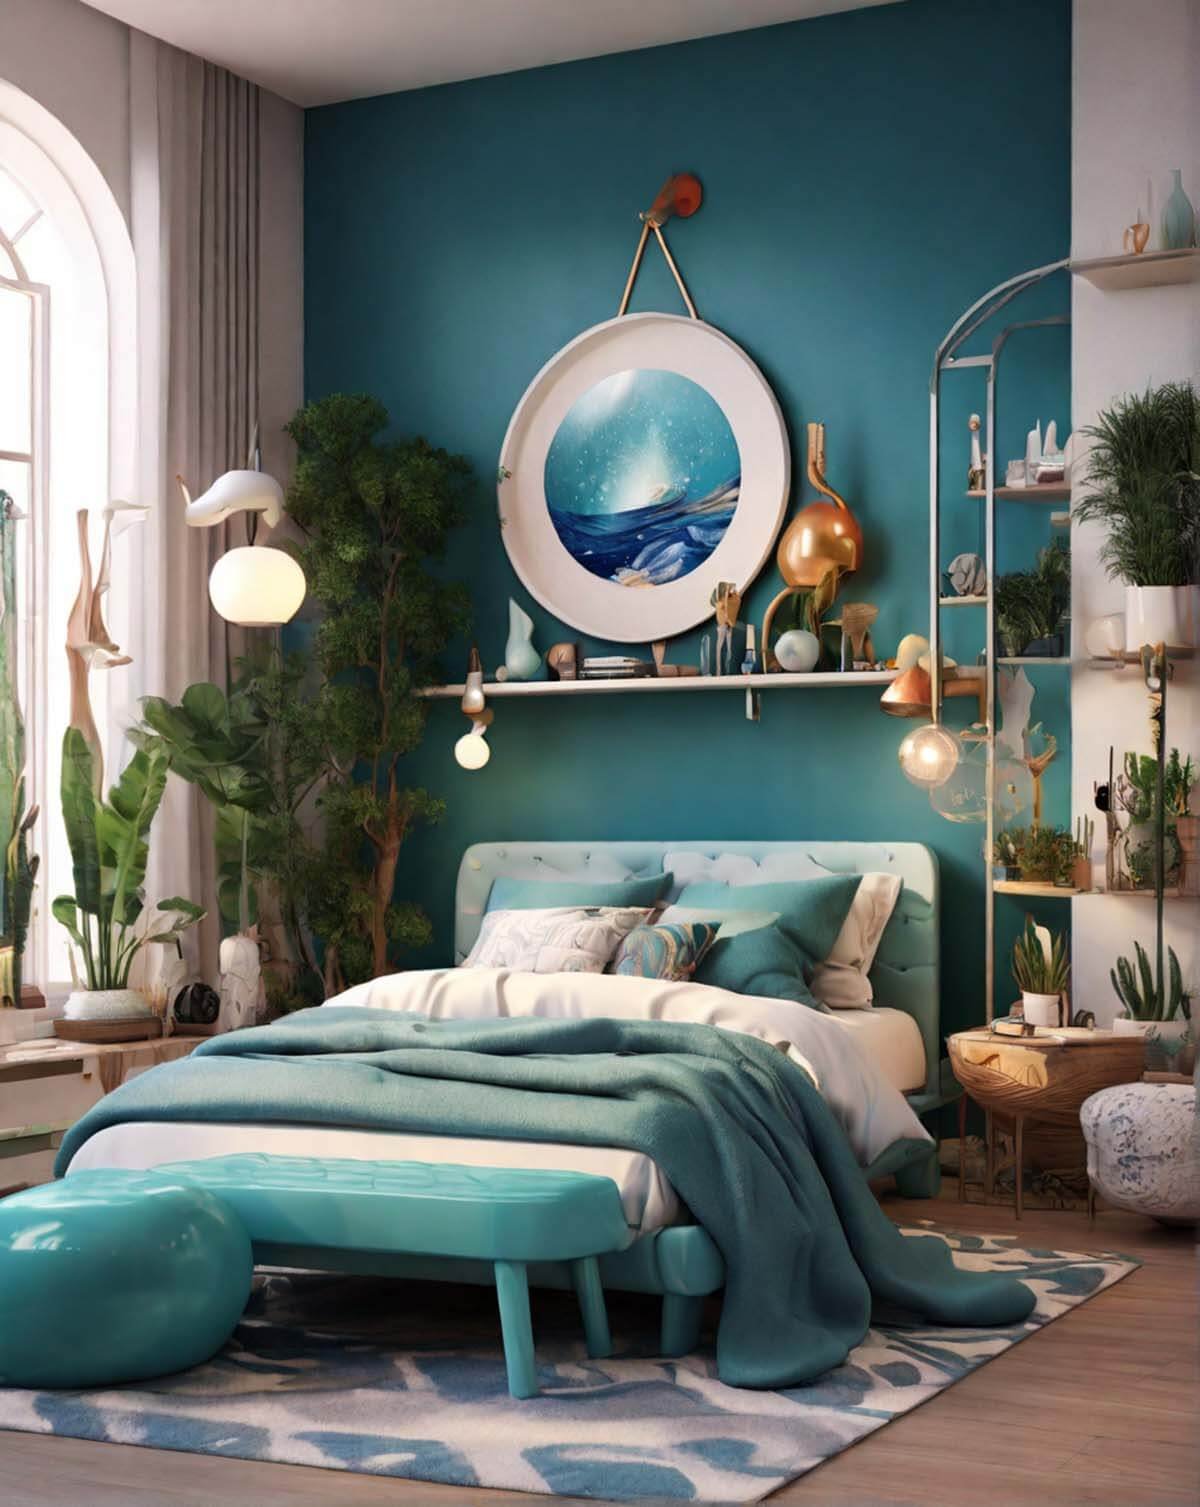 All zodiac signs bedroom decor ideas